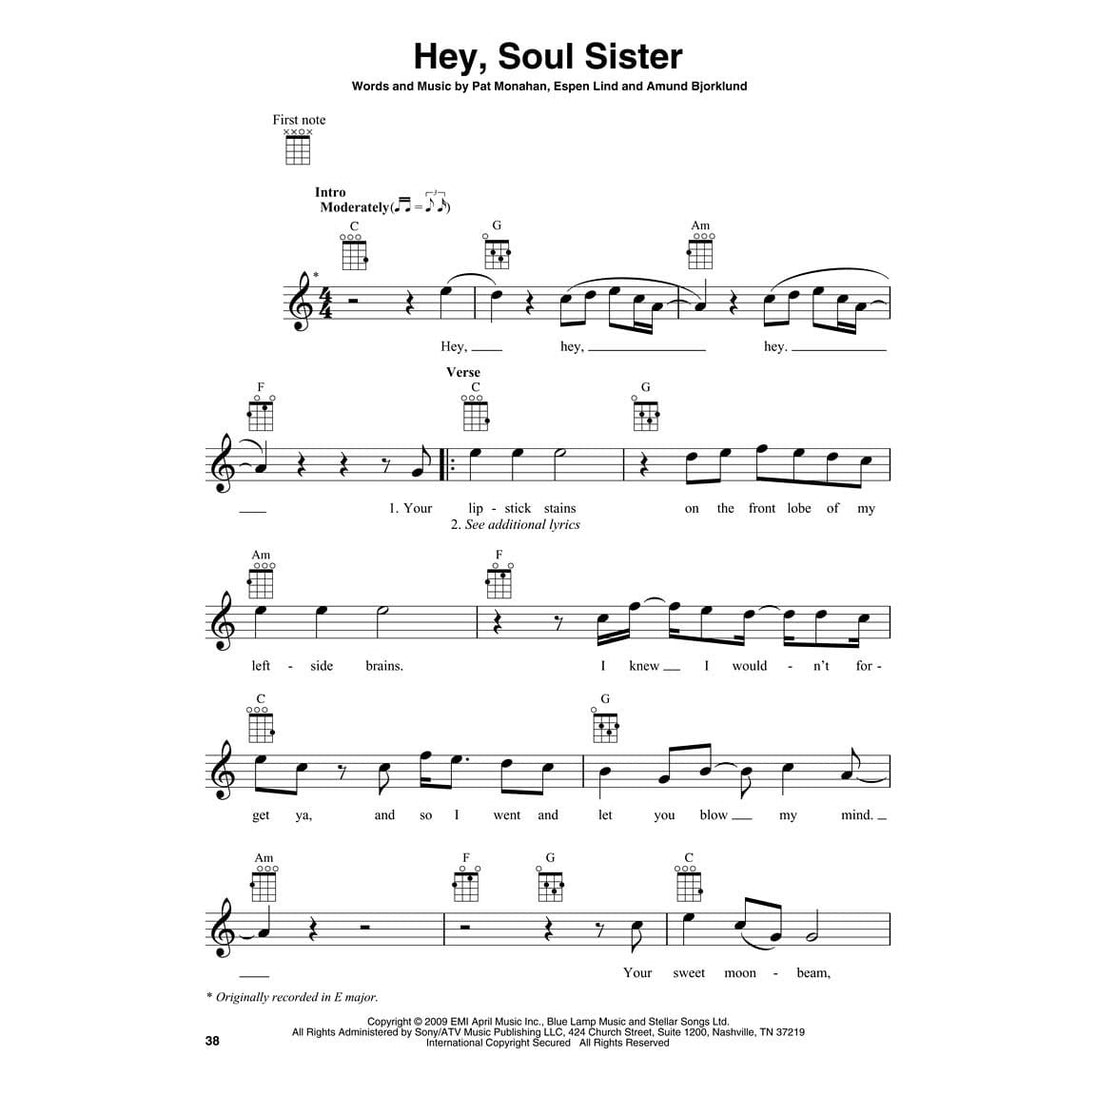 Hal Leonard First 50 Songs You Should Play on Ukulele